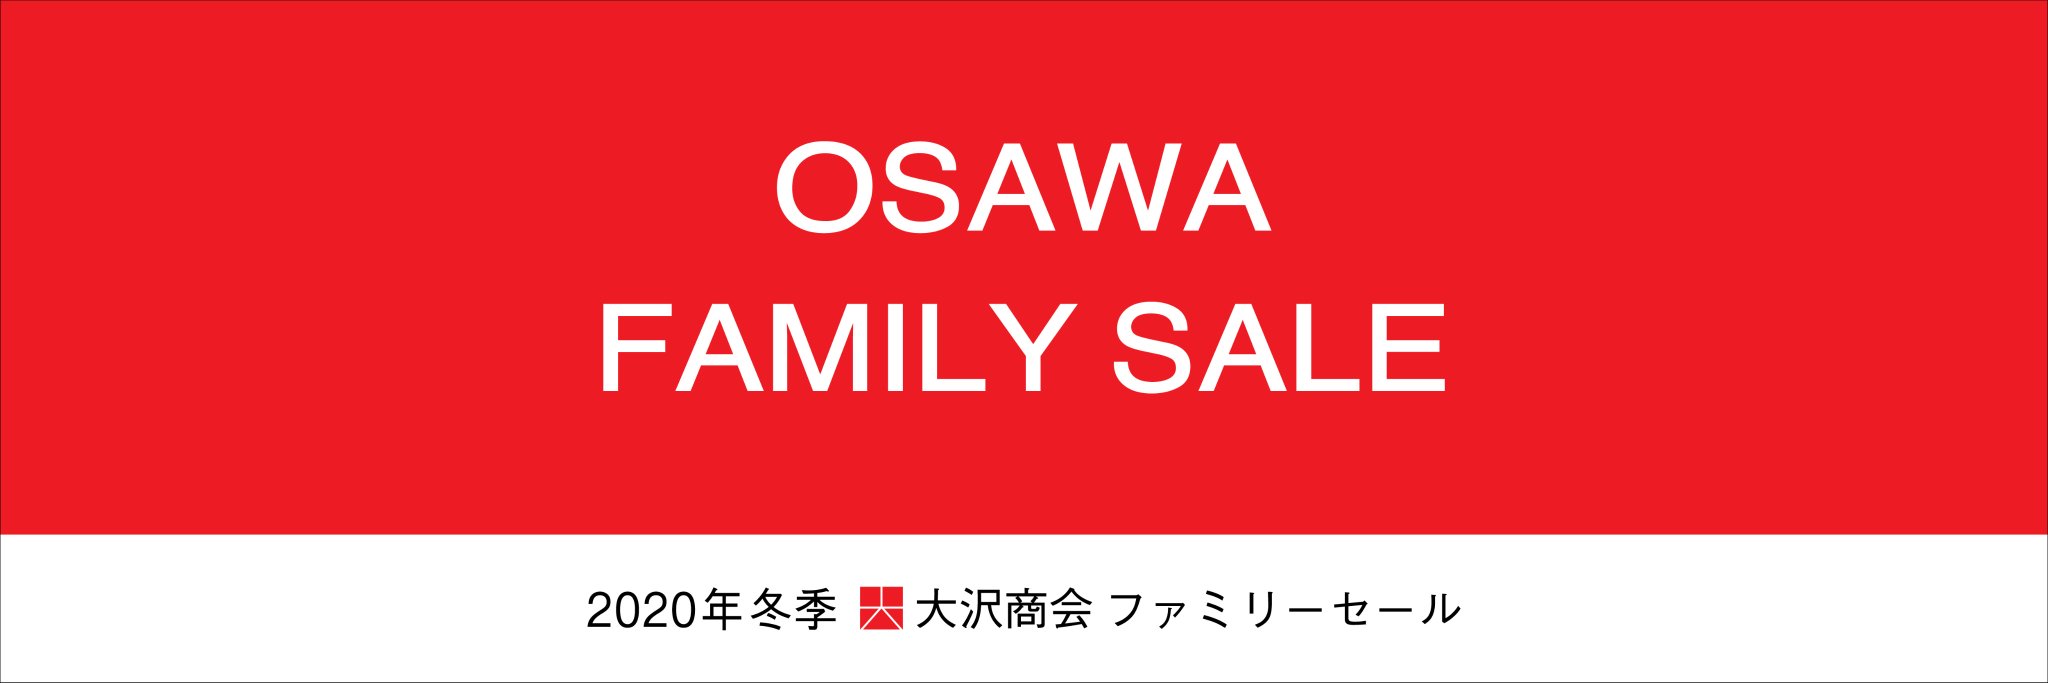 Osawa Online 大沢商会 大沢商会のecサイト Osawa Online が本日よりオープン 会員登録をした方には 11月21日 土 22日 日 の大沢商会ファミリーセールへご招待 オンラインでも ファミリーセールを開催中 是非ご登録宜しくお願いいたし